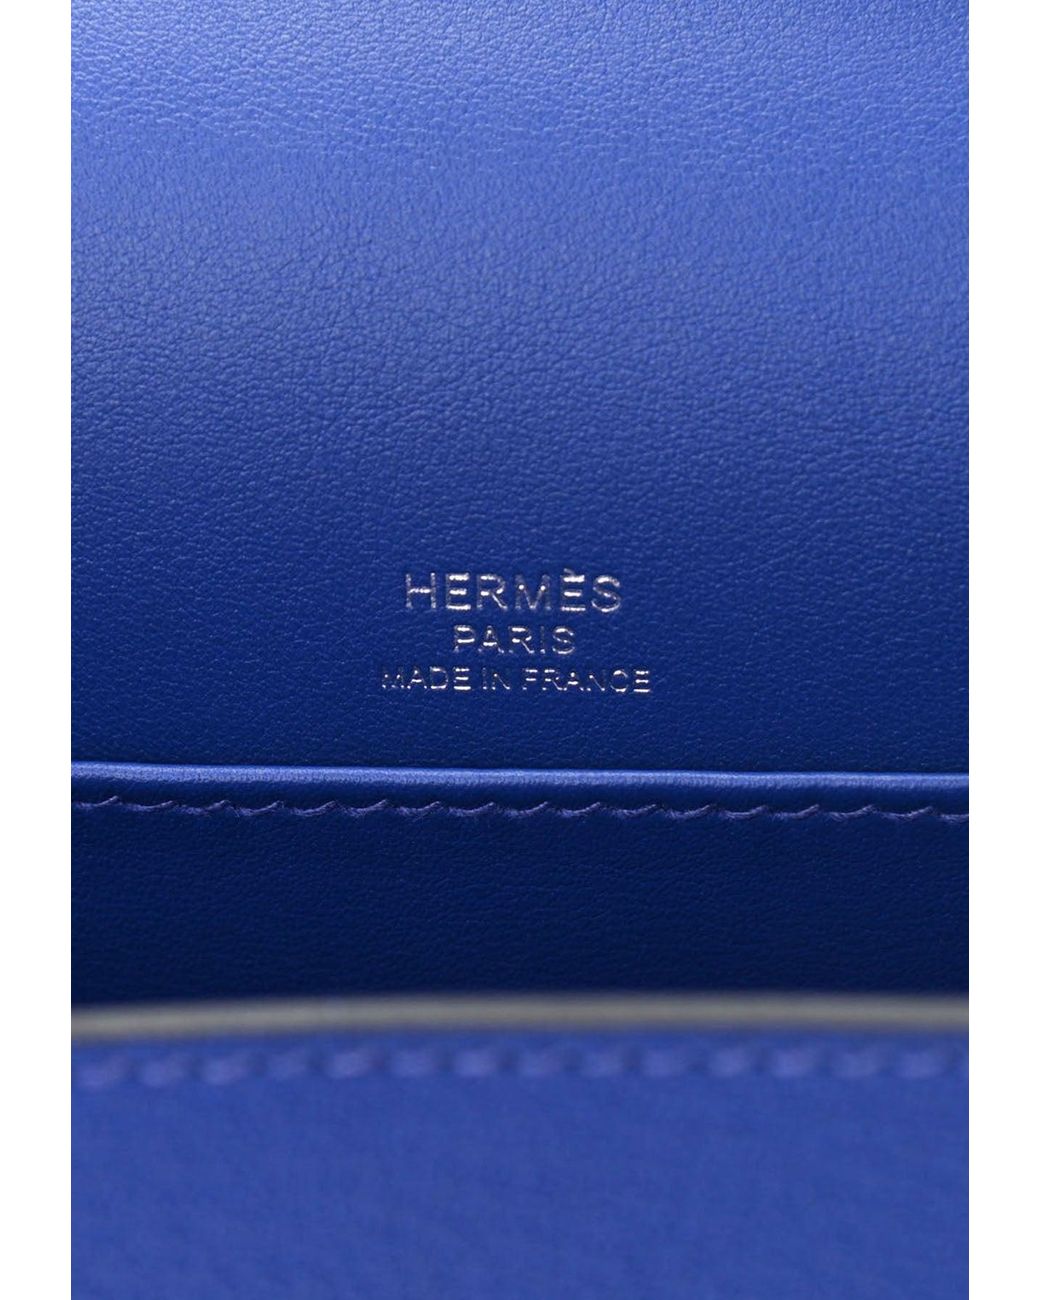 Replica Hermes Geta Handmade Bag In Blue Electric Chevre Mysore Leather